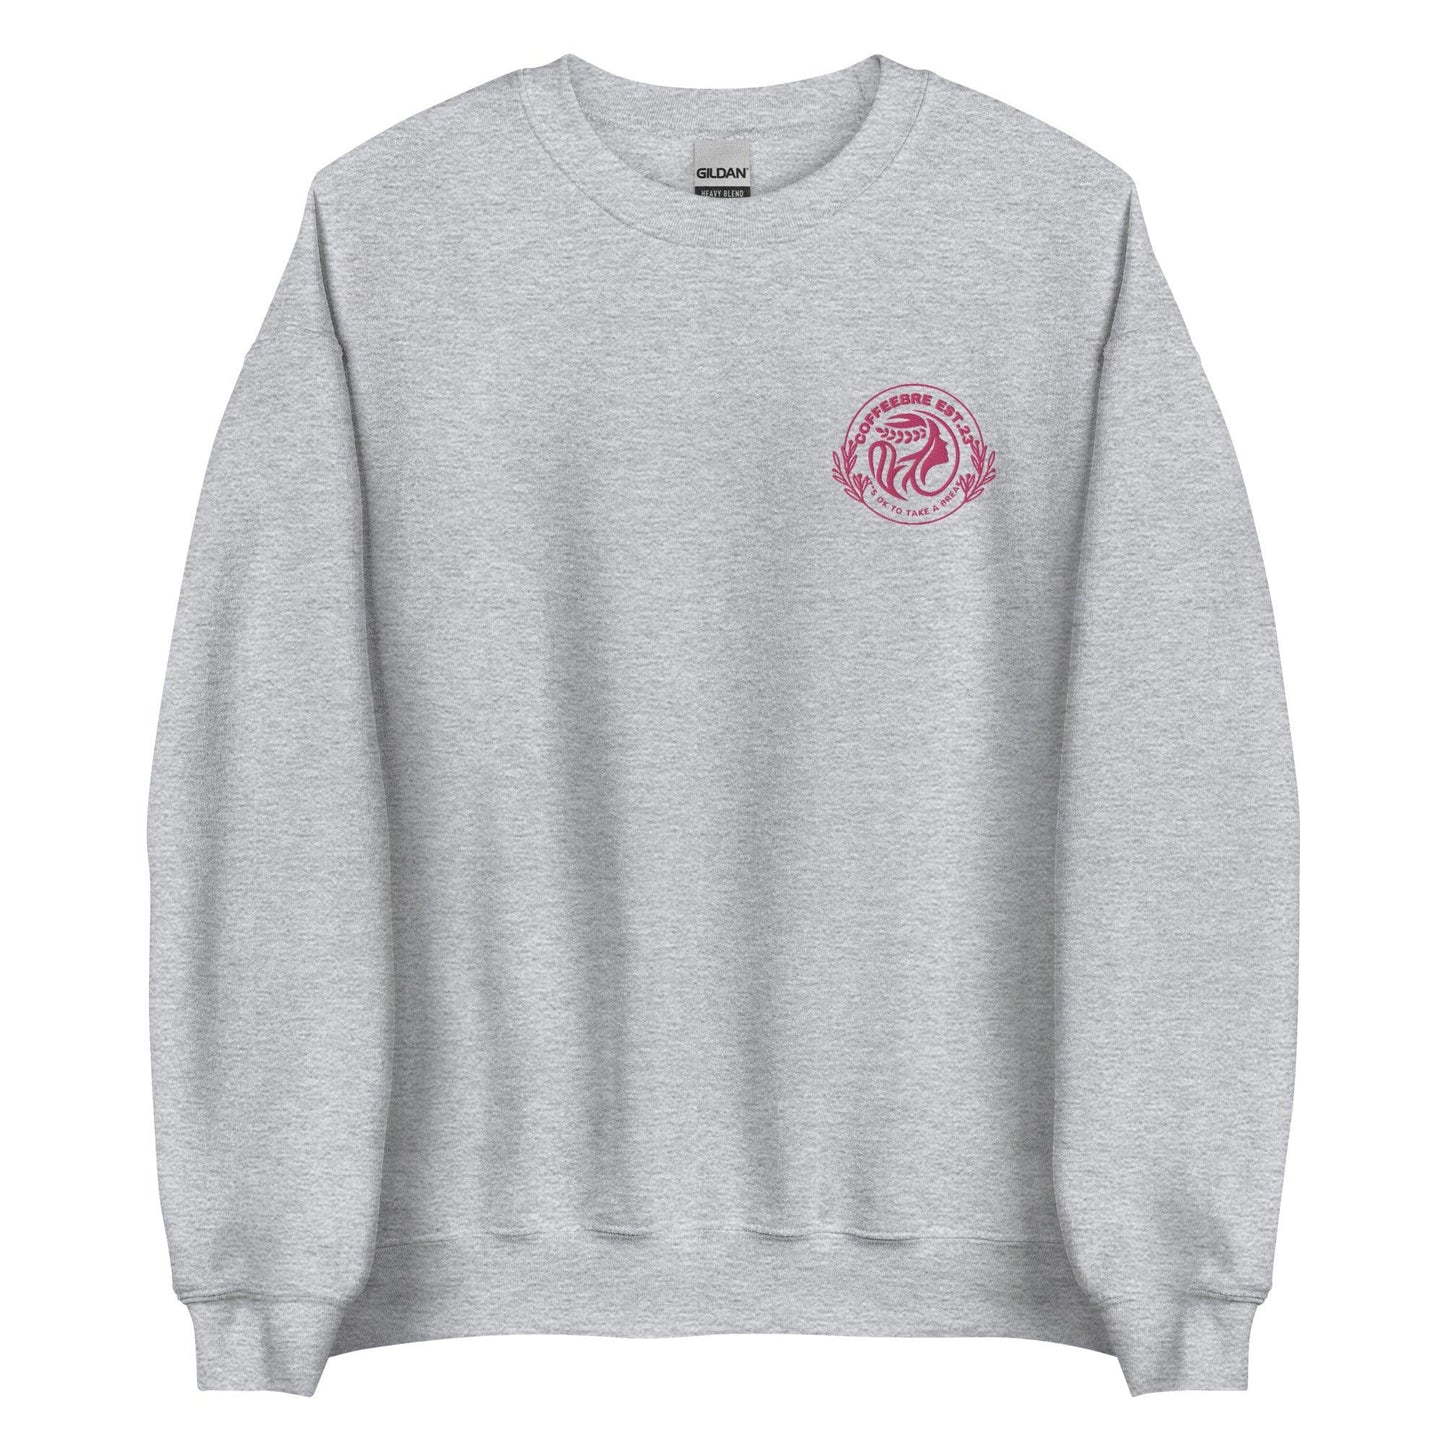 Coffeebre Pink Embroidered Unisex Sweatshirt - COFFEEBRE